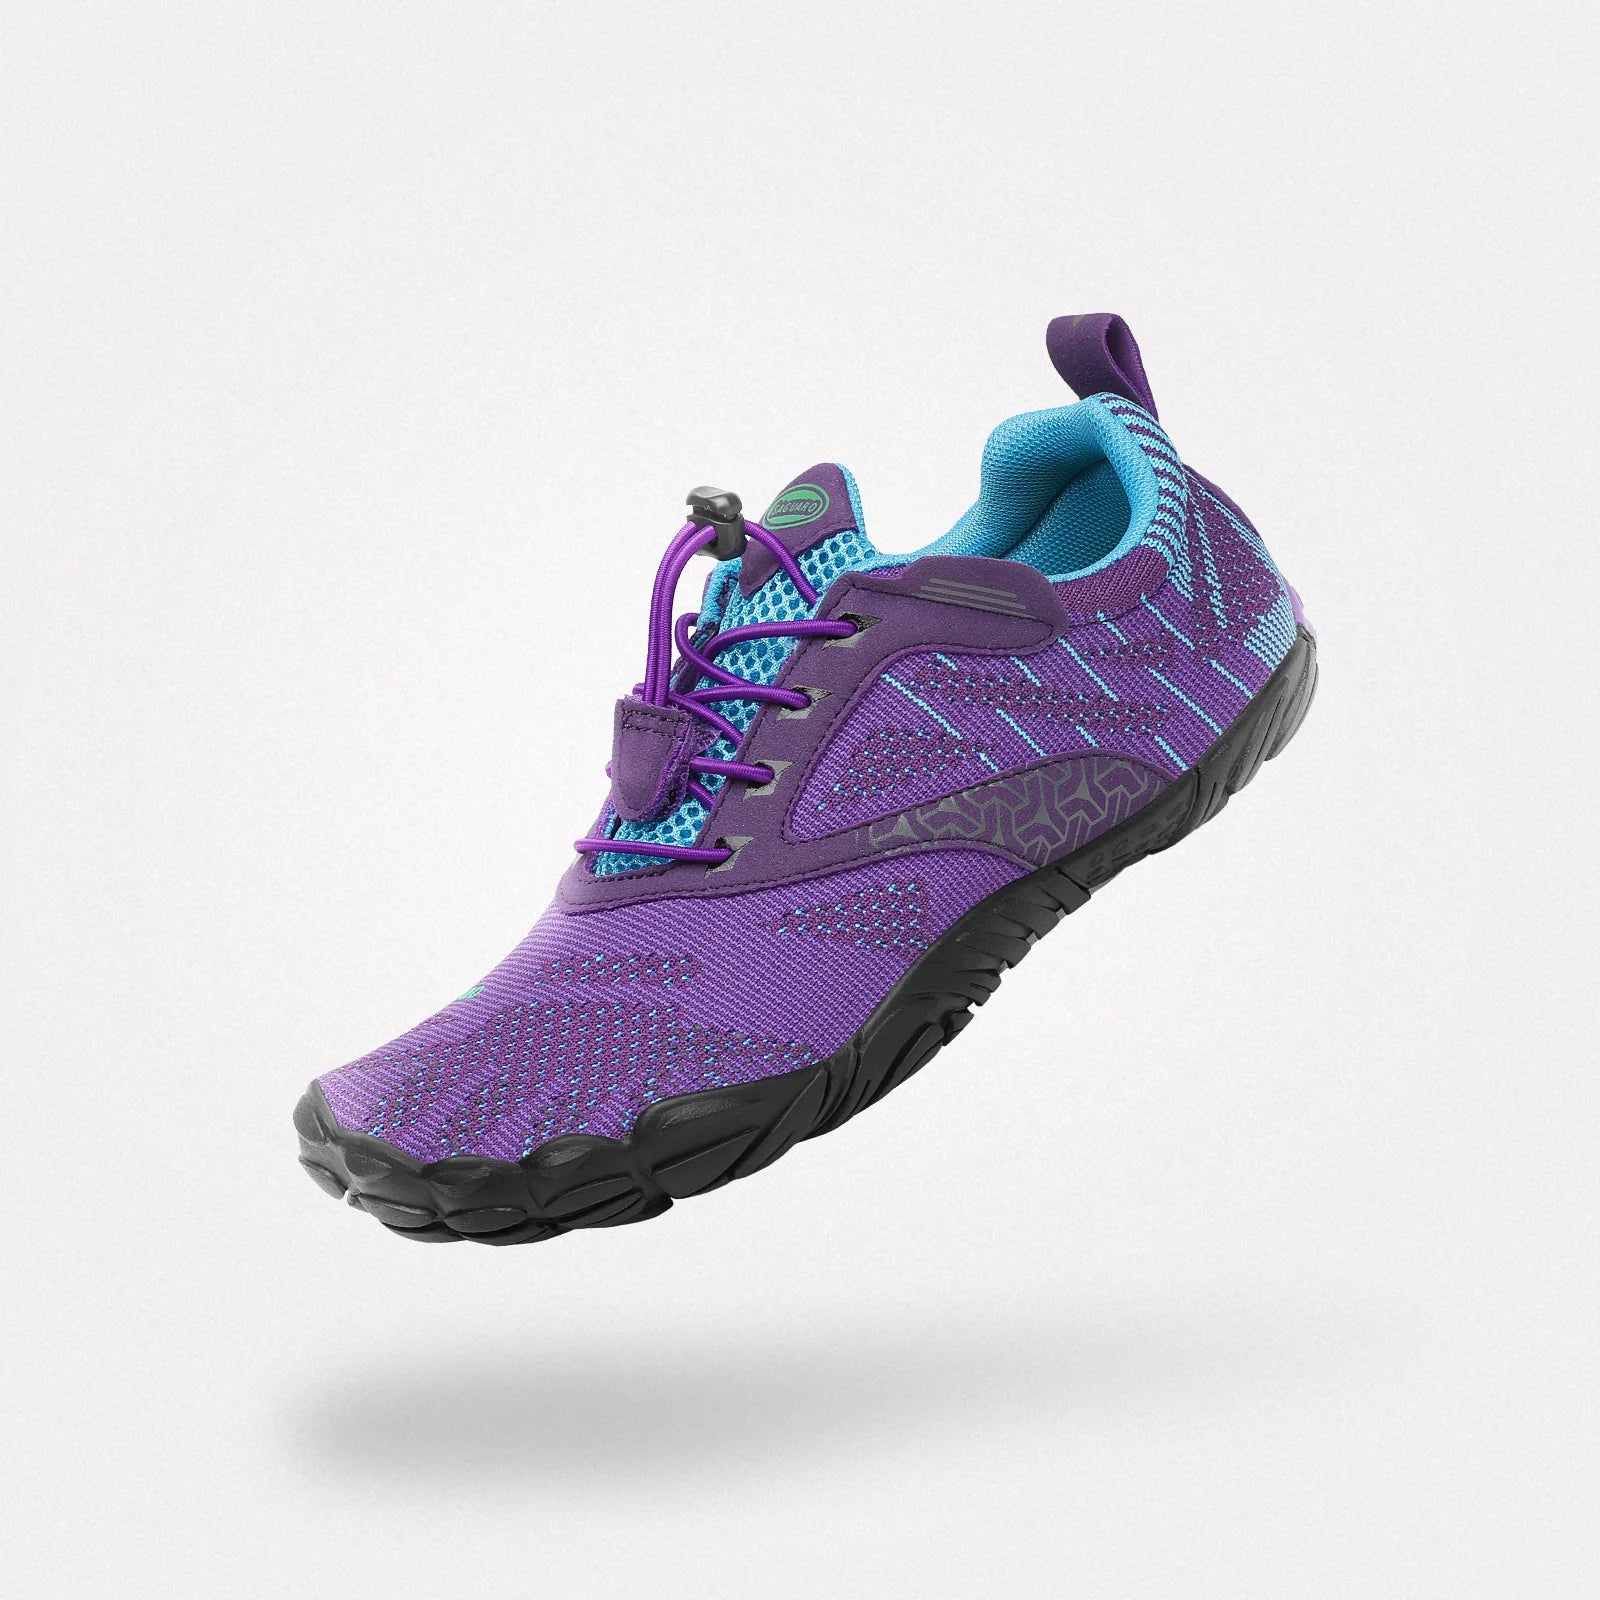 SAGUARO Women's Men's Barefoot Shoes Minimalist Trail Running Shoes Walking, Wide Toe Box, Outdoor Cross Trainer